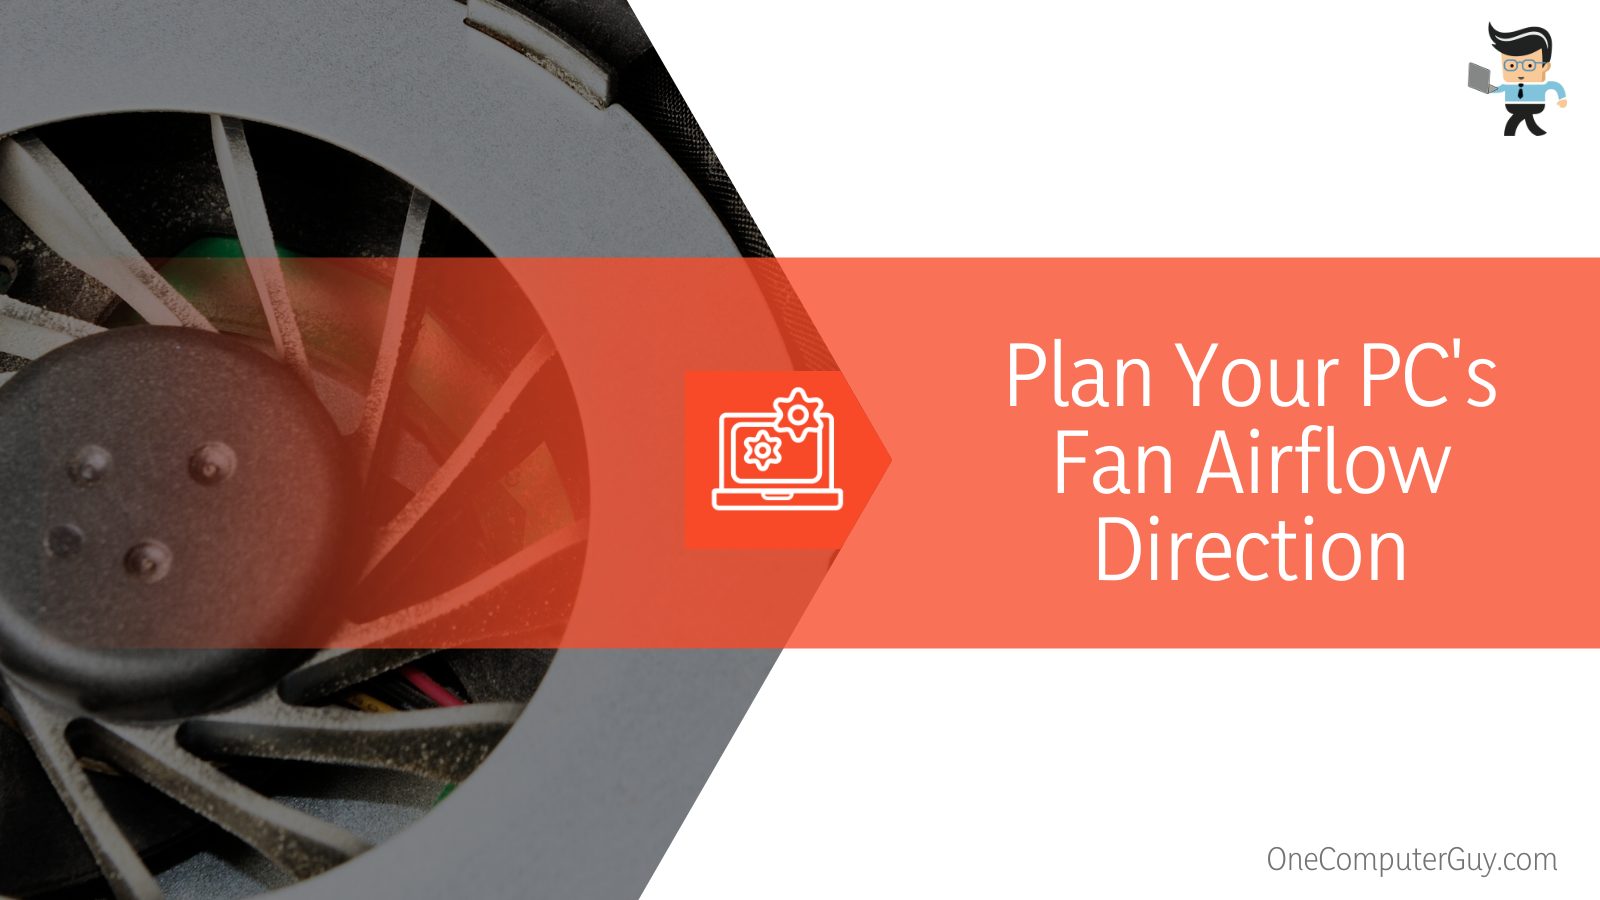 Plan Your PC's Fan Airflow Direction